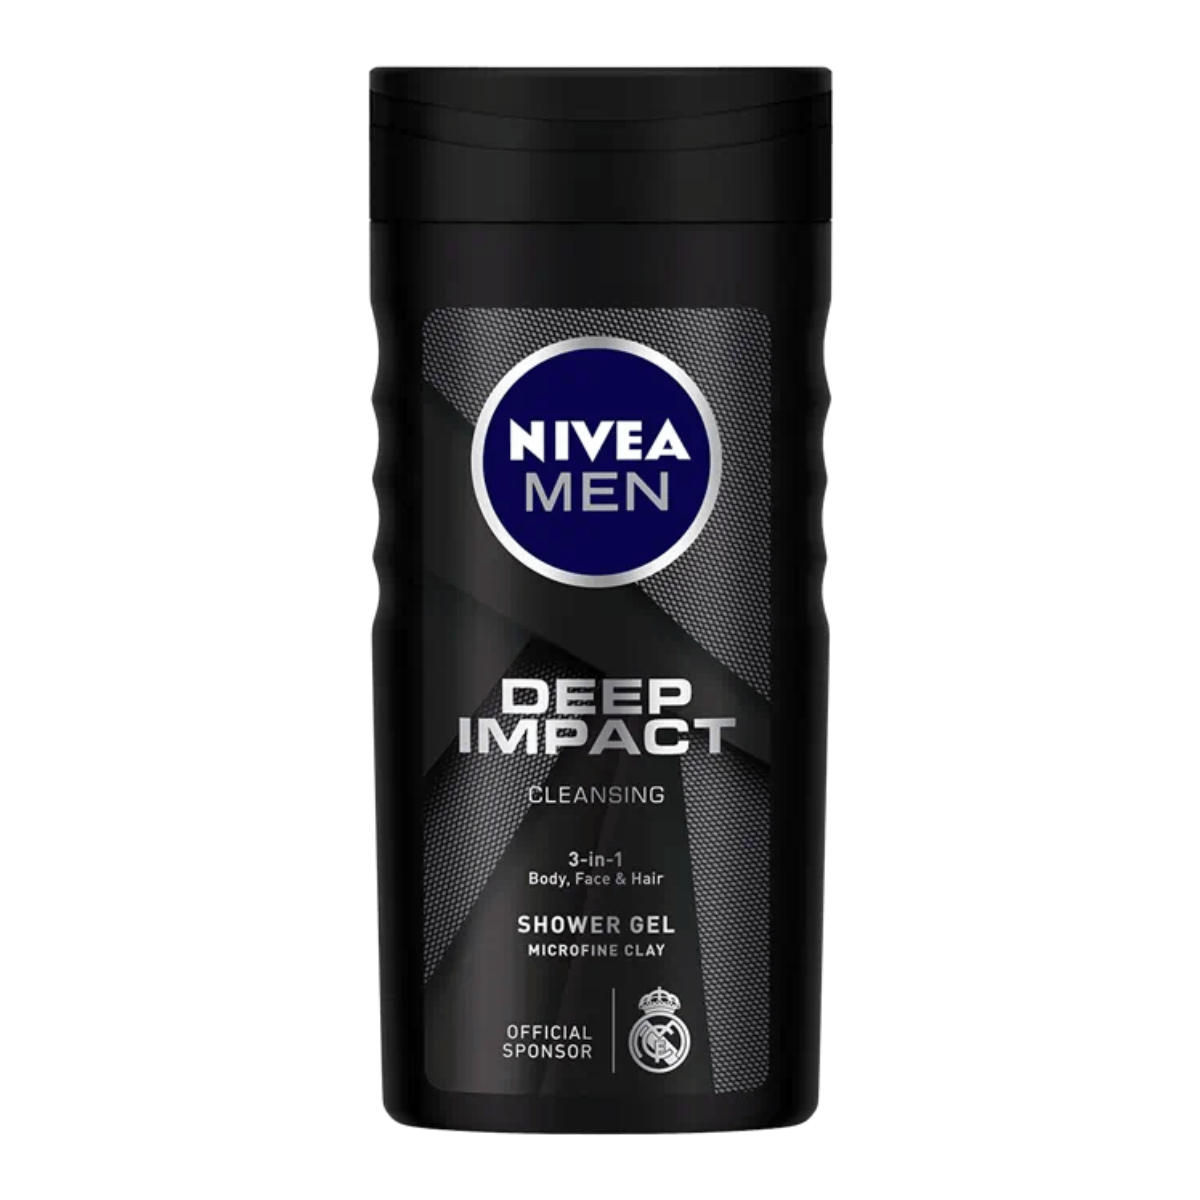 Nivea Deep Impact Cleansing Shower Gel, 3 in 1, Body, Face  & Hair, Microfine Clay, 250 ml